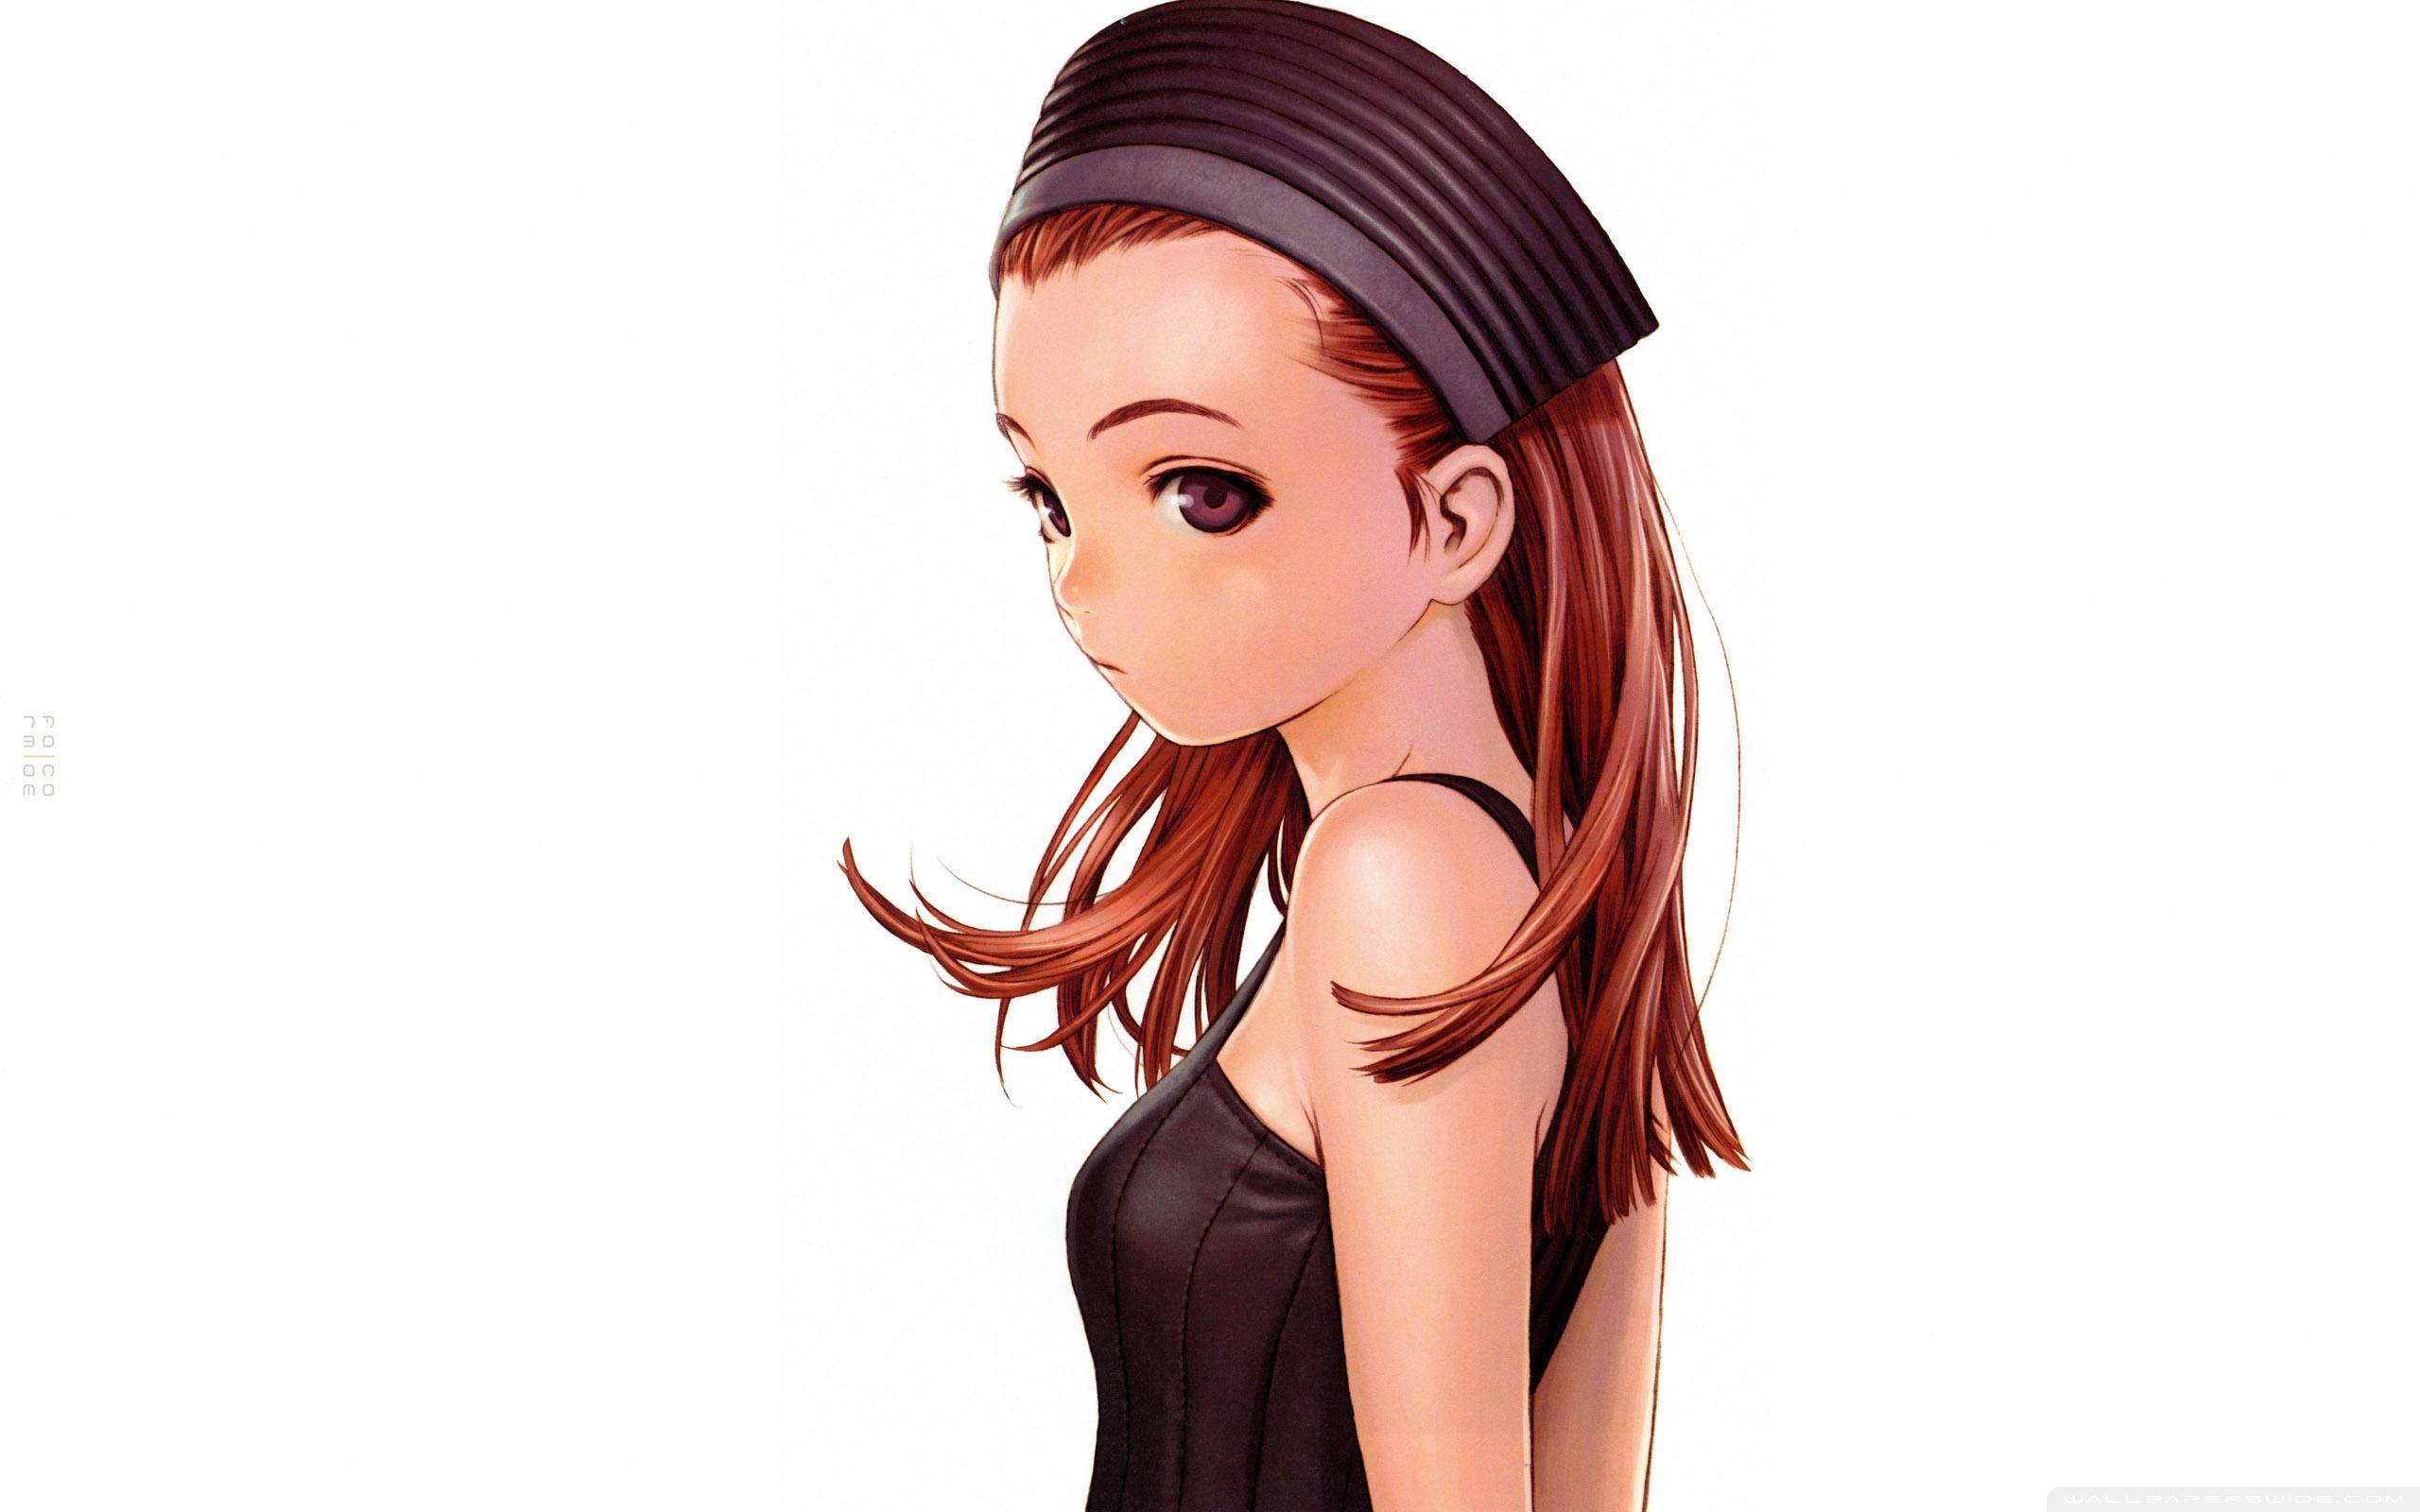 Anime Girl With Long Brown Hair And Brown Eyes Ultra HD Desktop Background Wallpaper for 4K UHD TV, Widescreen & UltraWide Desktop & Laptop, Tablet